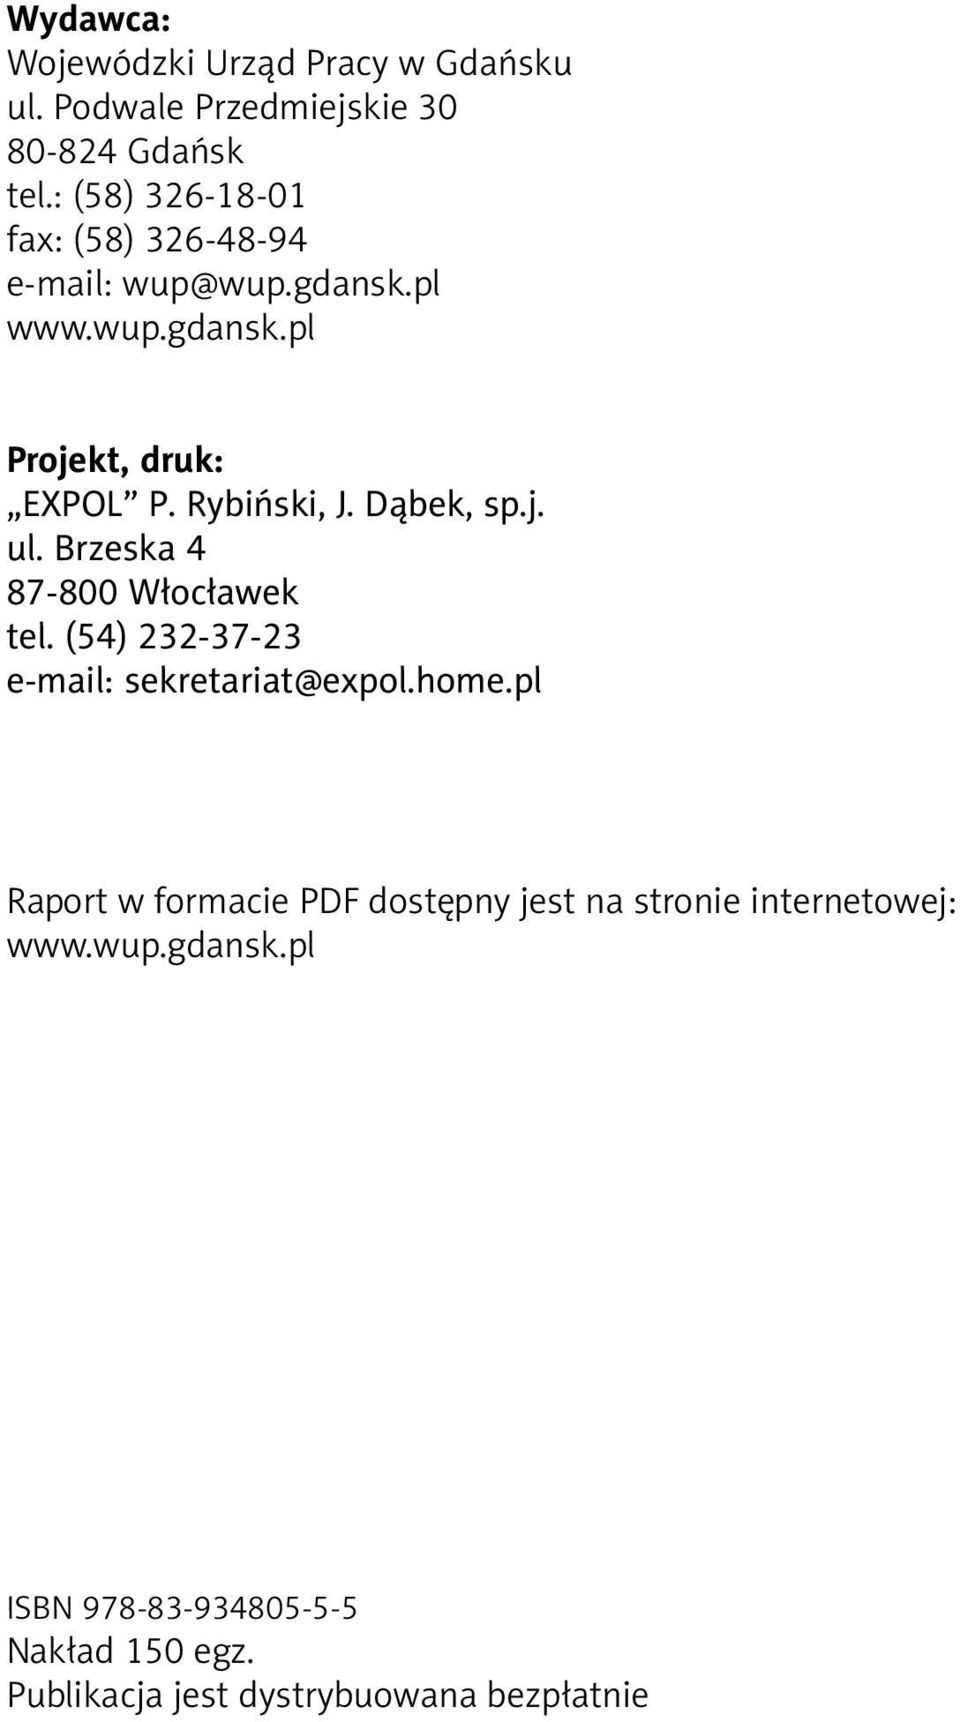 Rybiński, J. Dąbek, sp.j. ul. Brzeska 4 87-800 Włocławek tel. (54) 232-37-23 e-mail: sekretariat@expol.home.